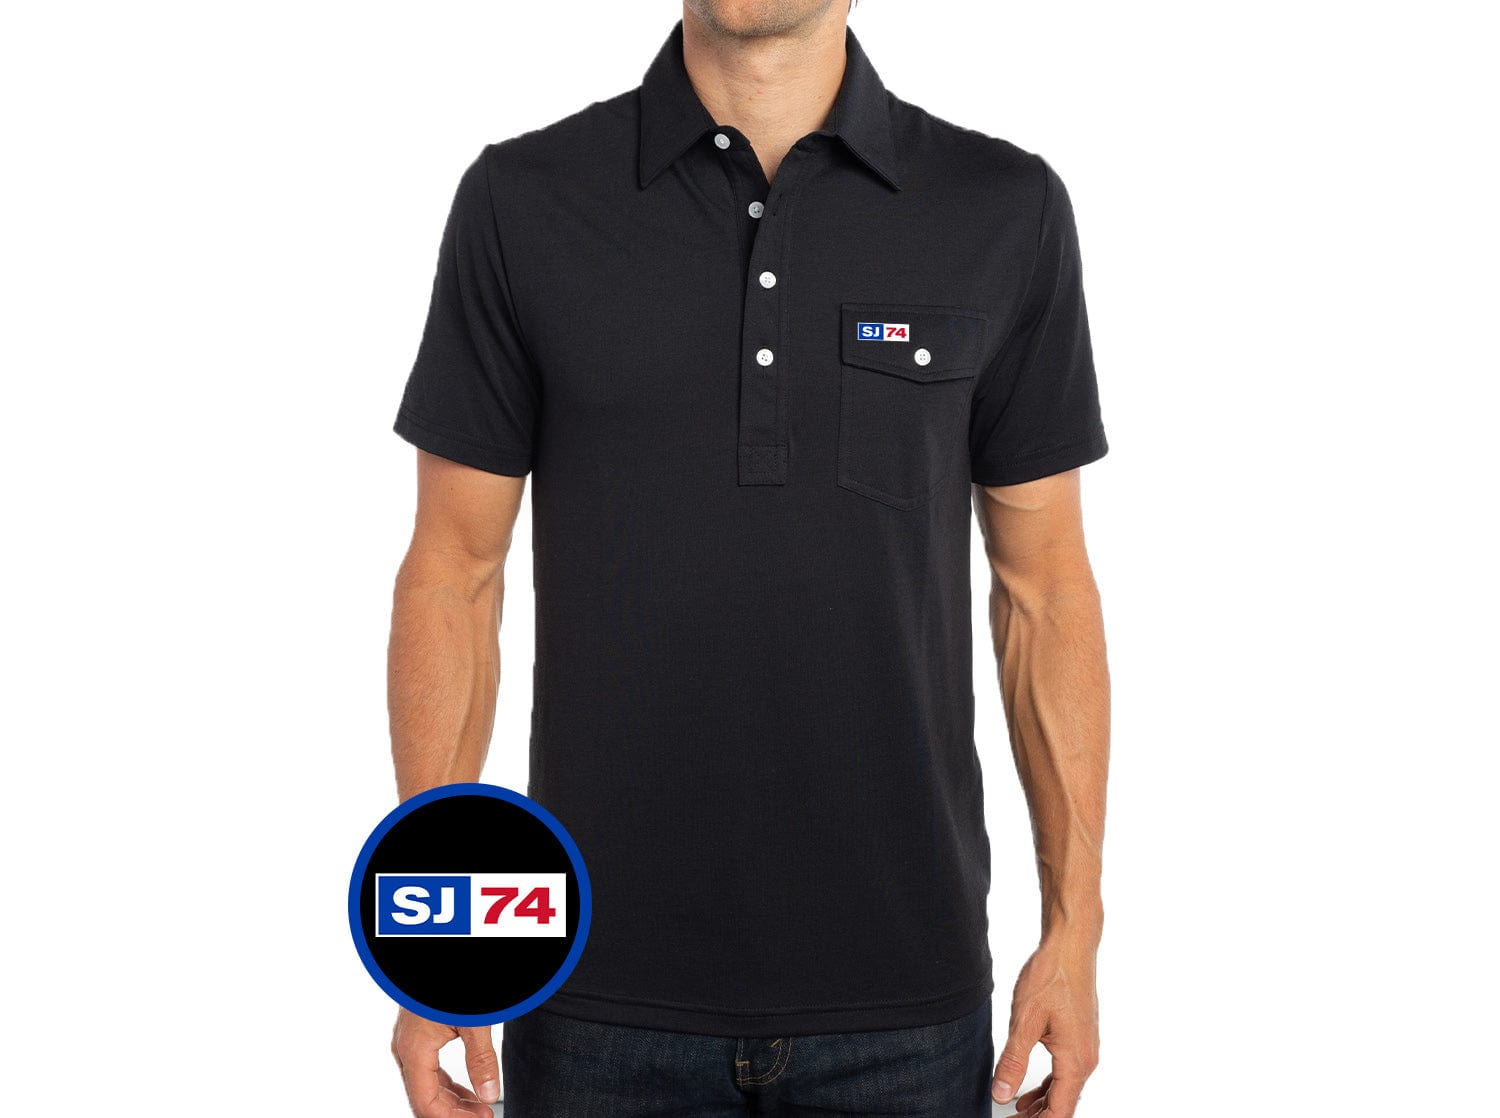 San Jose Earlthquakes - Performance Players Shirt - SJ74 - Black